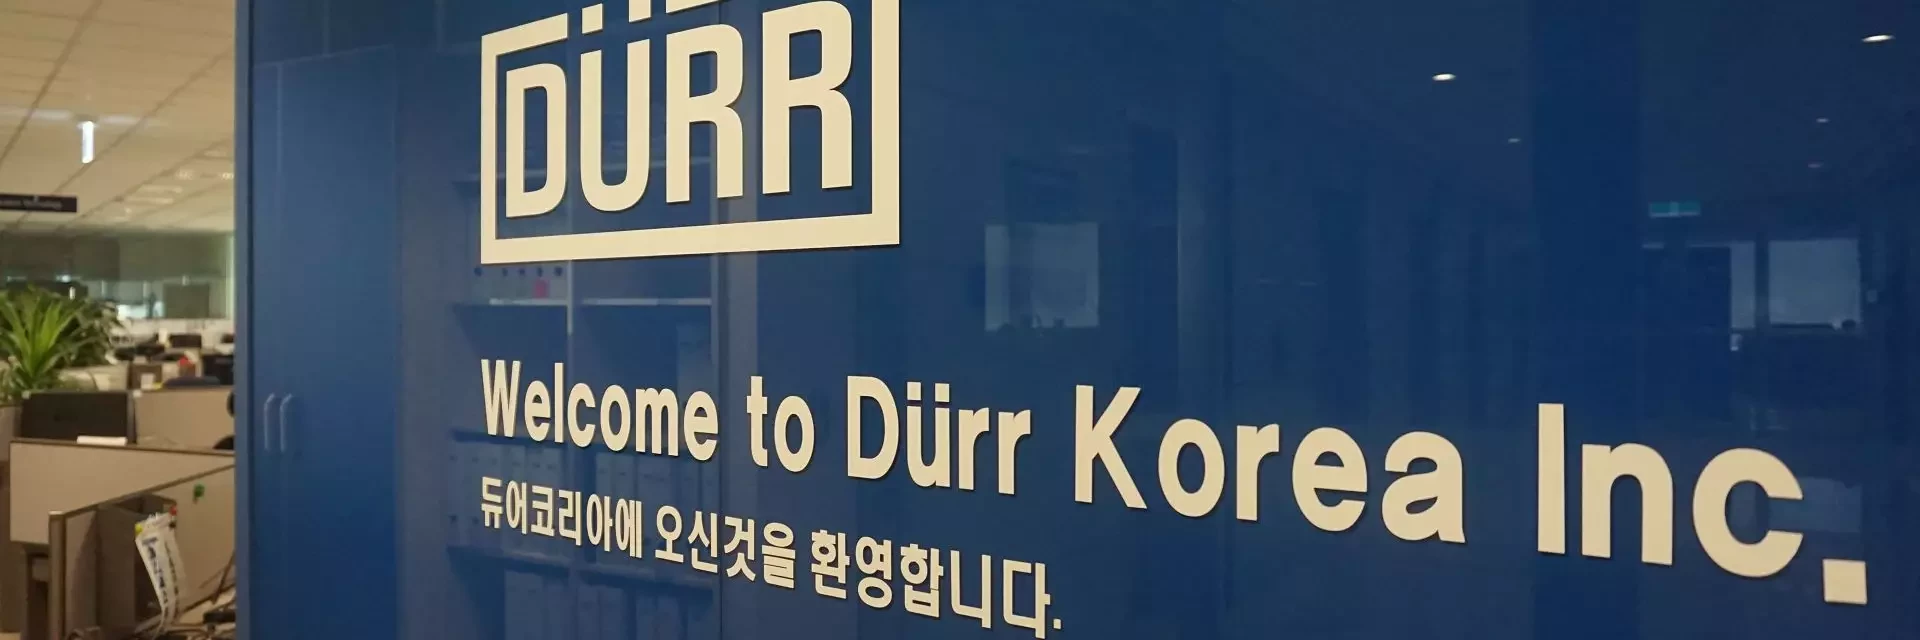 duerr location korea